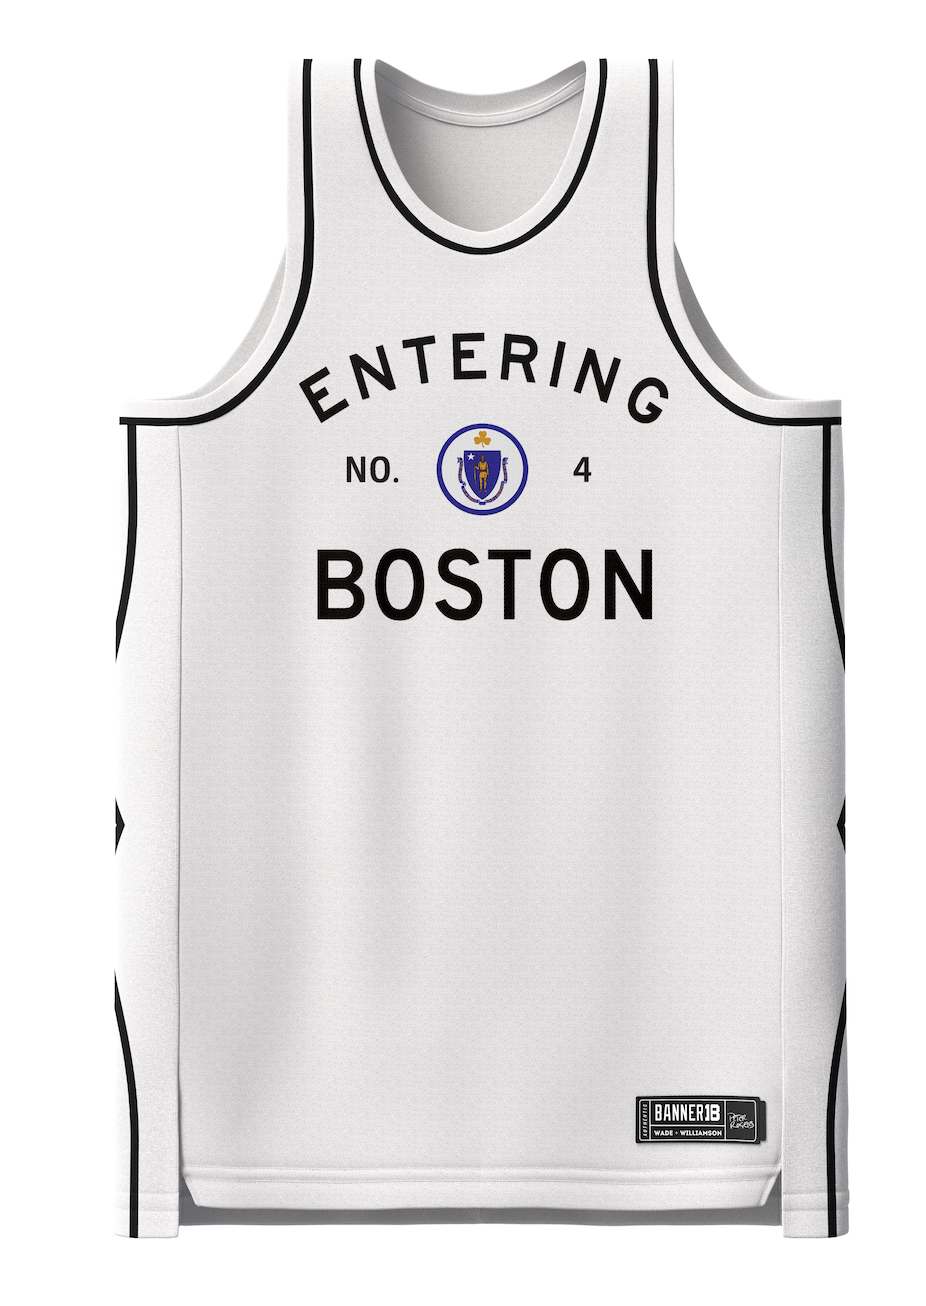 "Entering Boston" Jersey